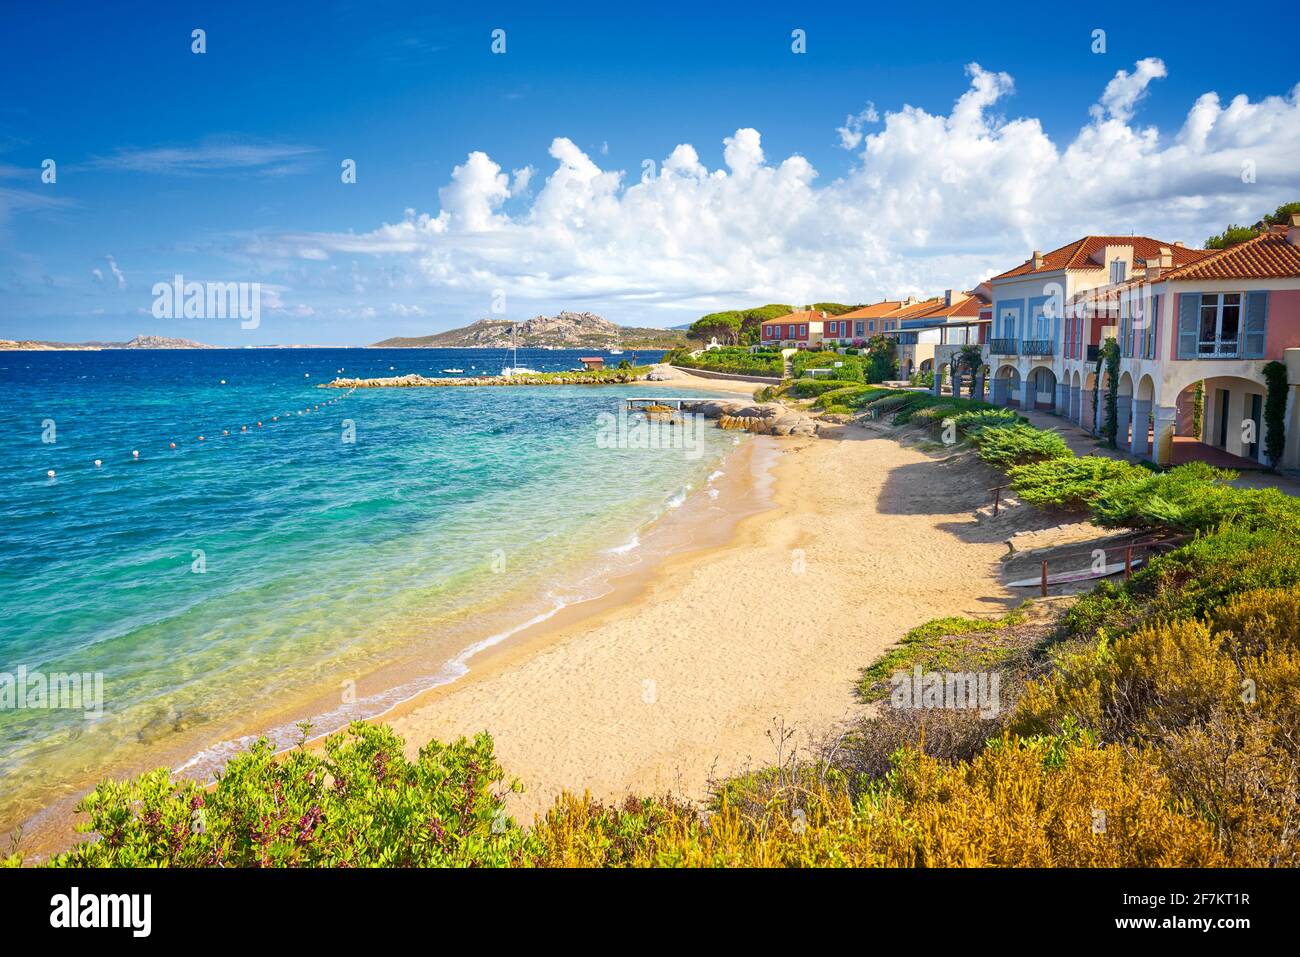 Palau beach, Costa Smeralda, Sardinia Island, Italy Stock Photo